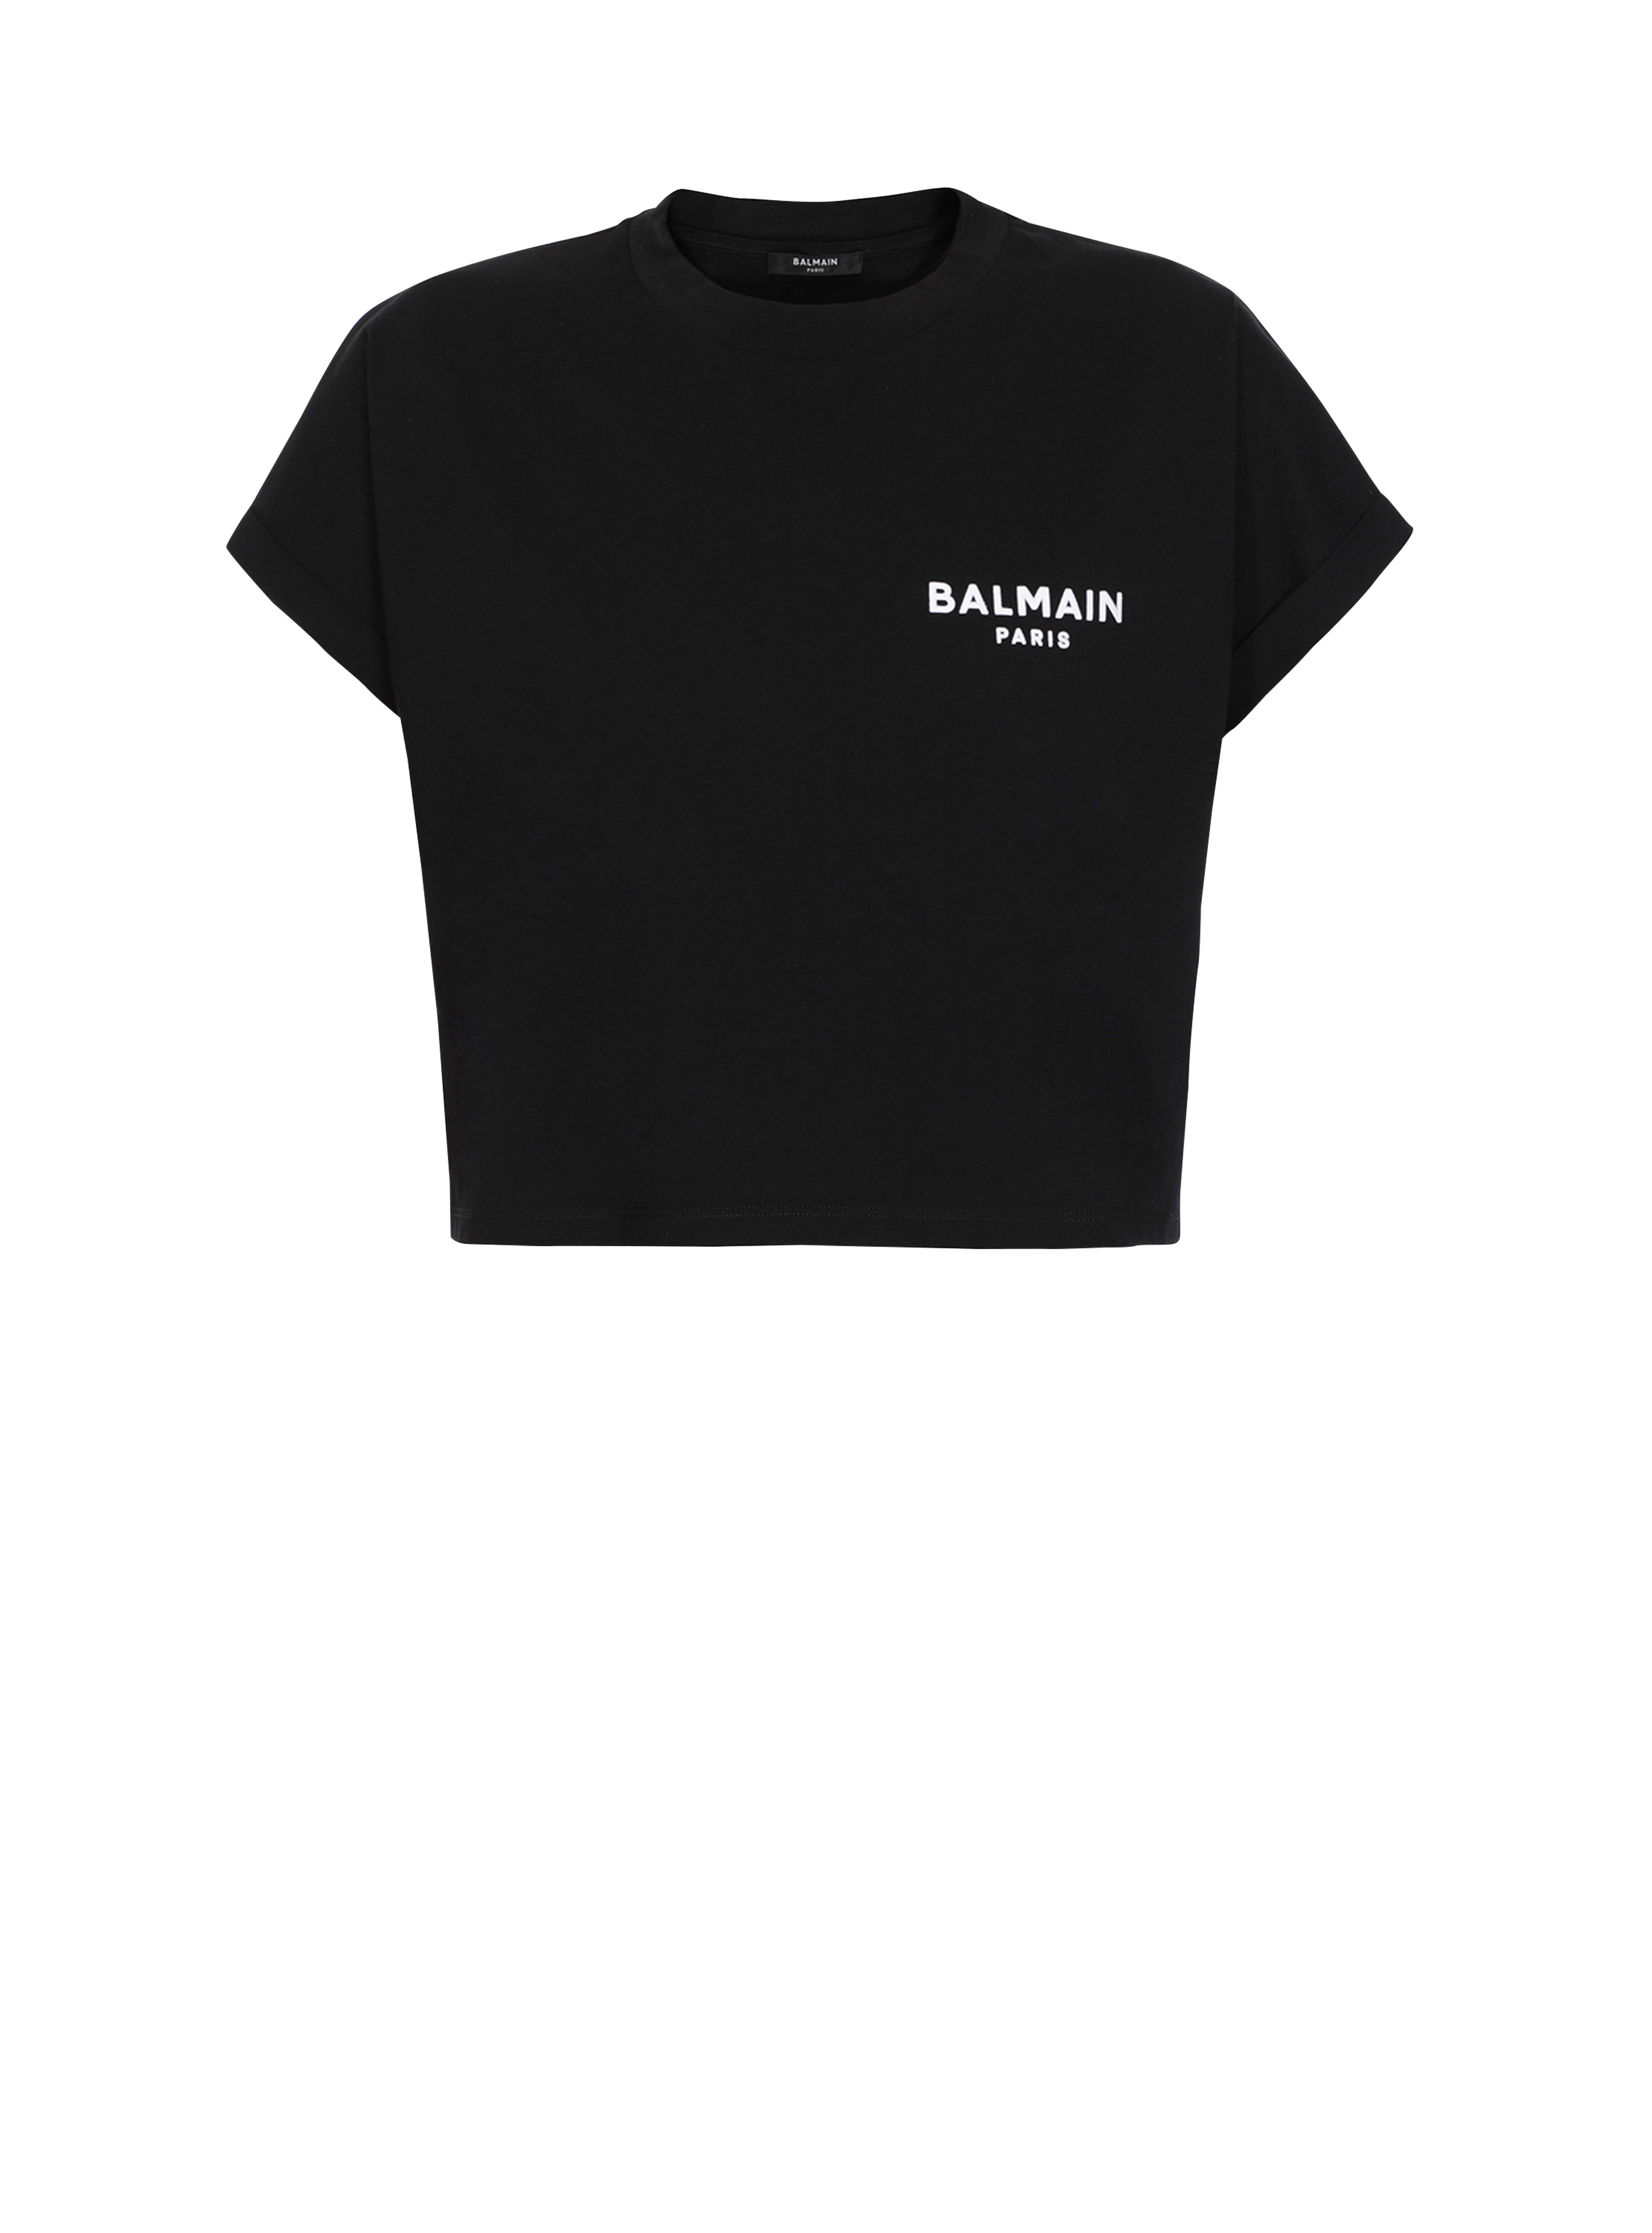 Cropped eco-designed cotton T-shirt with small flocked Balmain logo, black